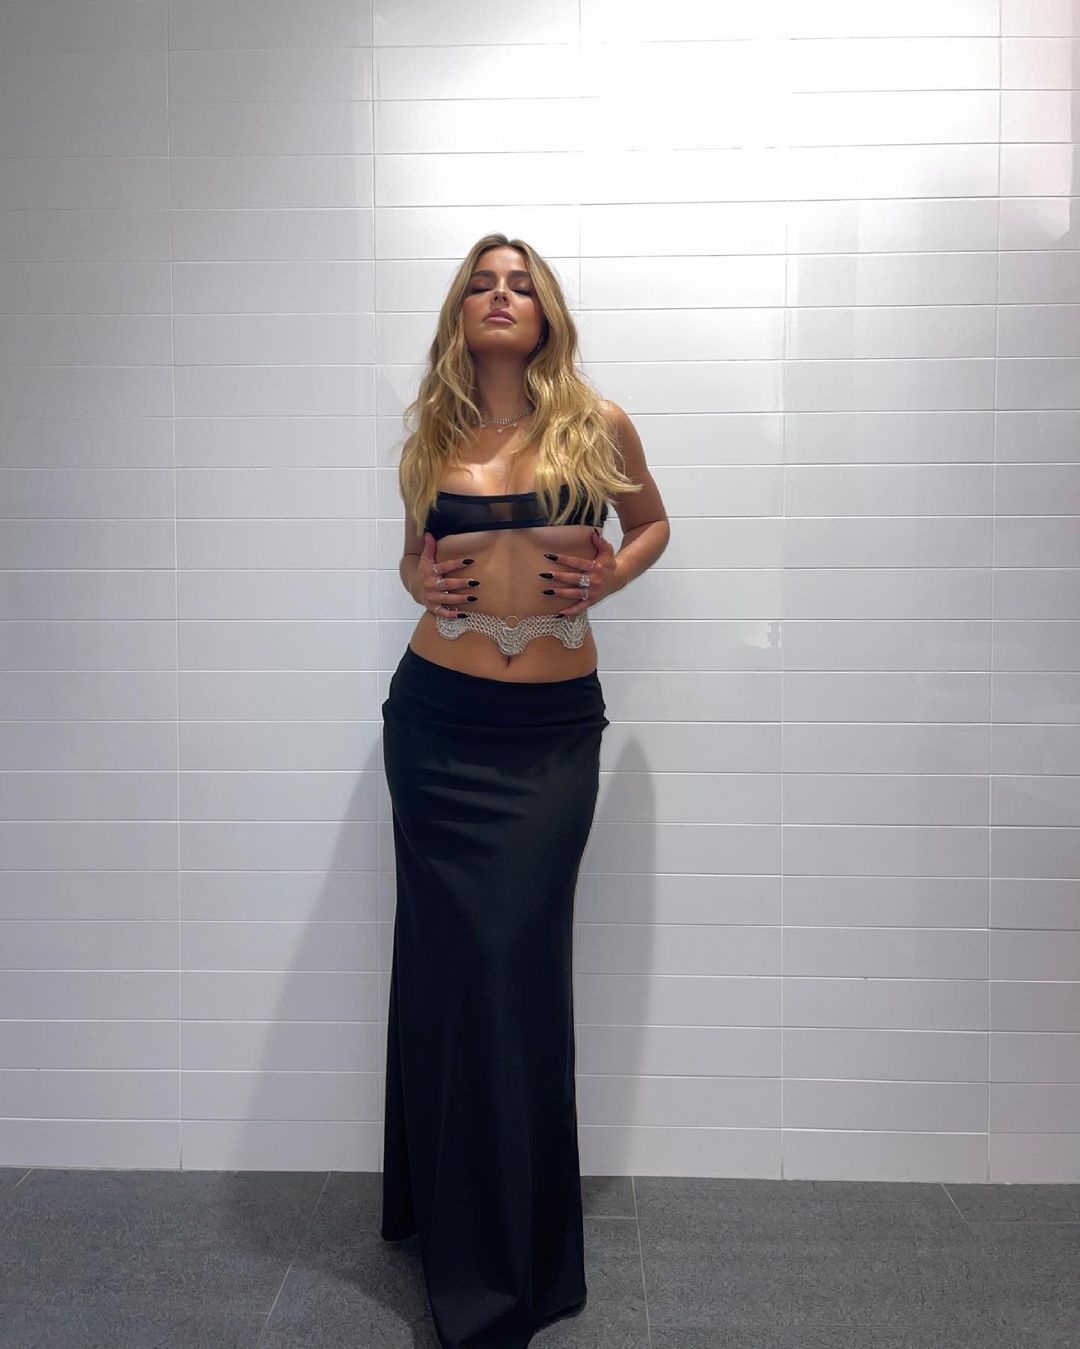 Addison Rae Flaunts Her Tits at the 2021 MTV Movie & TV Awards (44 Photos)